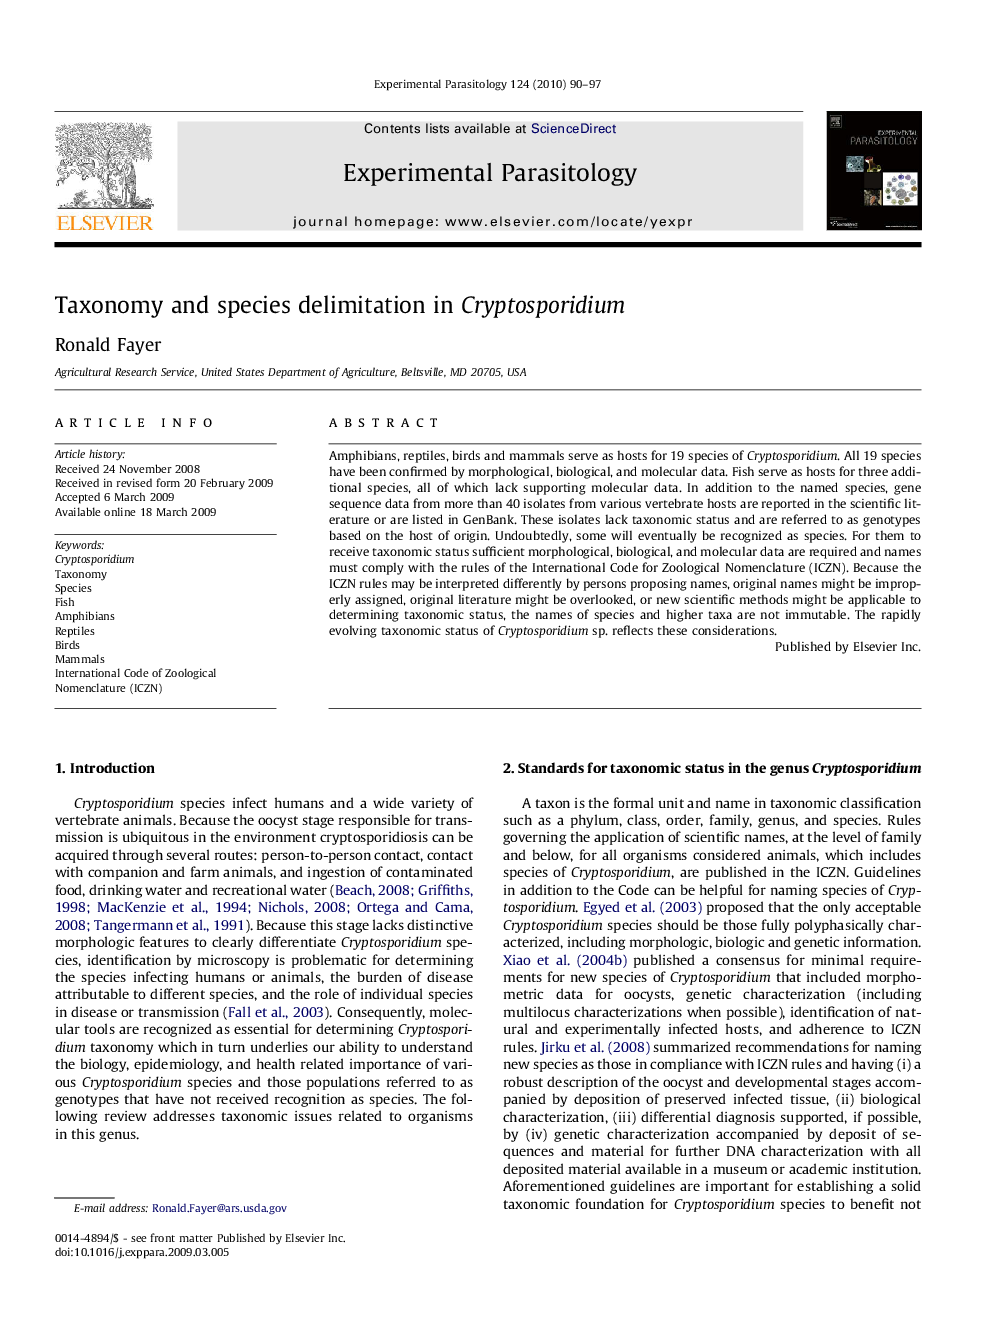 Taxonomy and species delimitation in Cryptosporidium